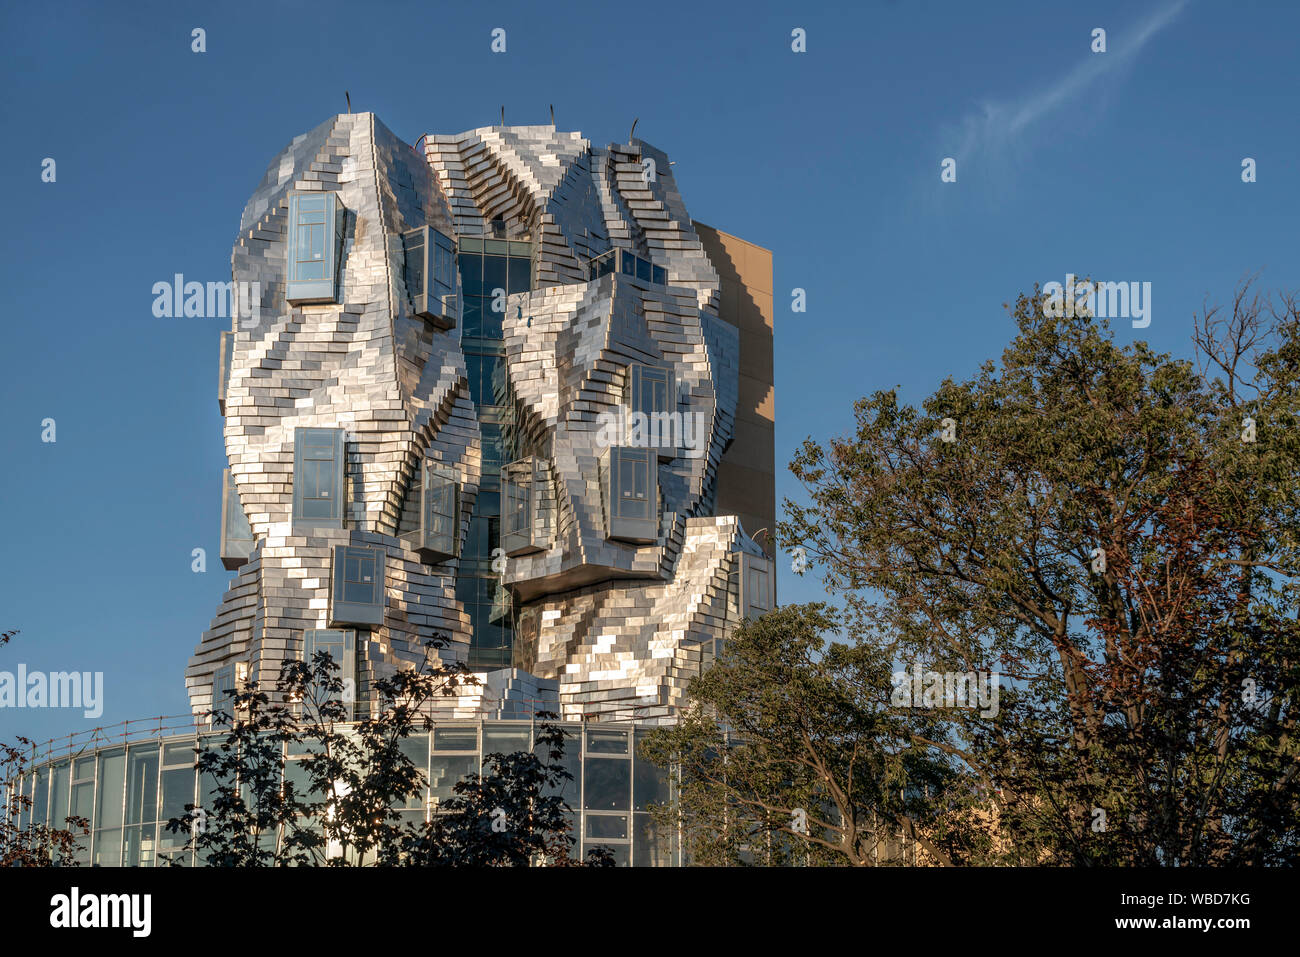 LUMA Arles, culture center by architect Frank Gehry Arles, Provence, france Stock Photo